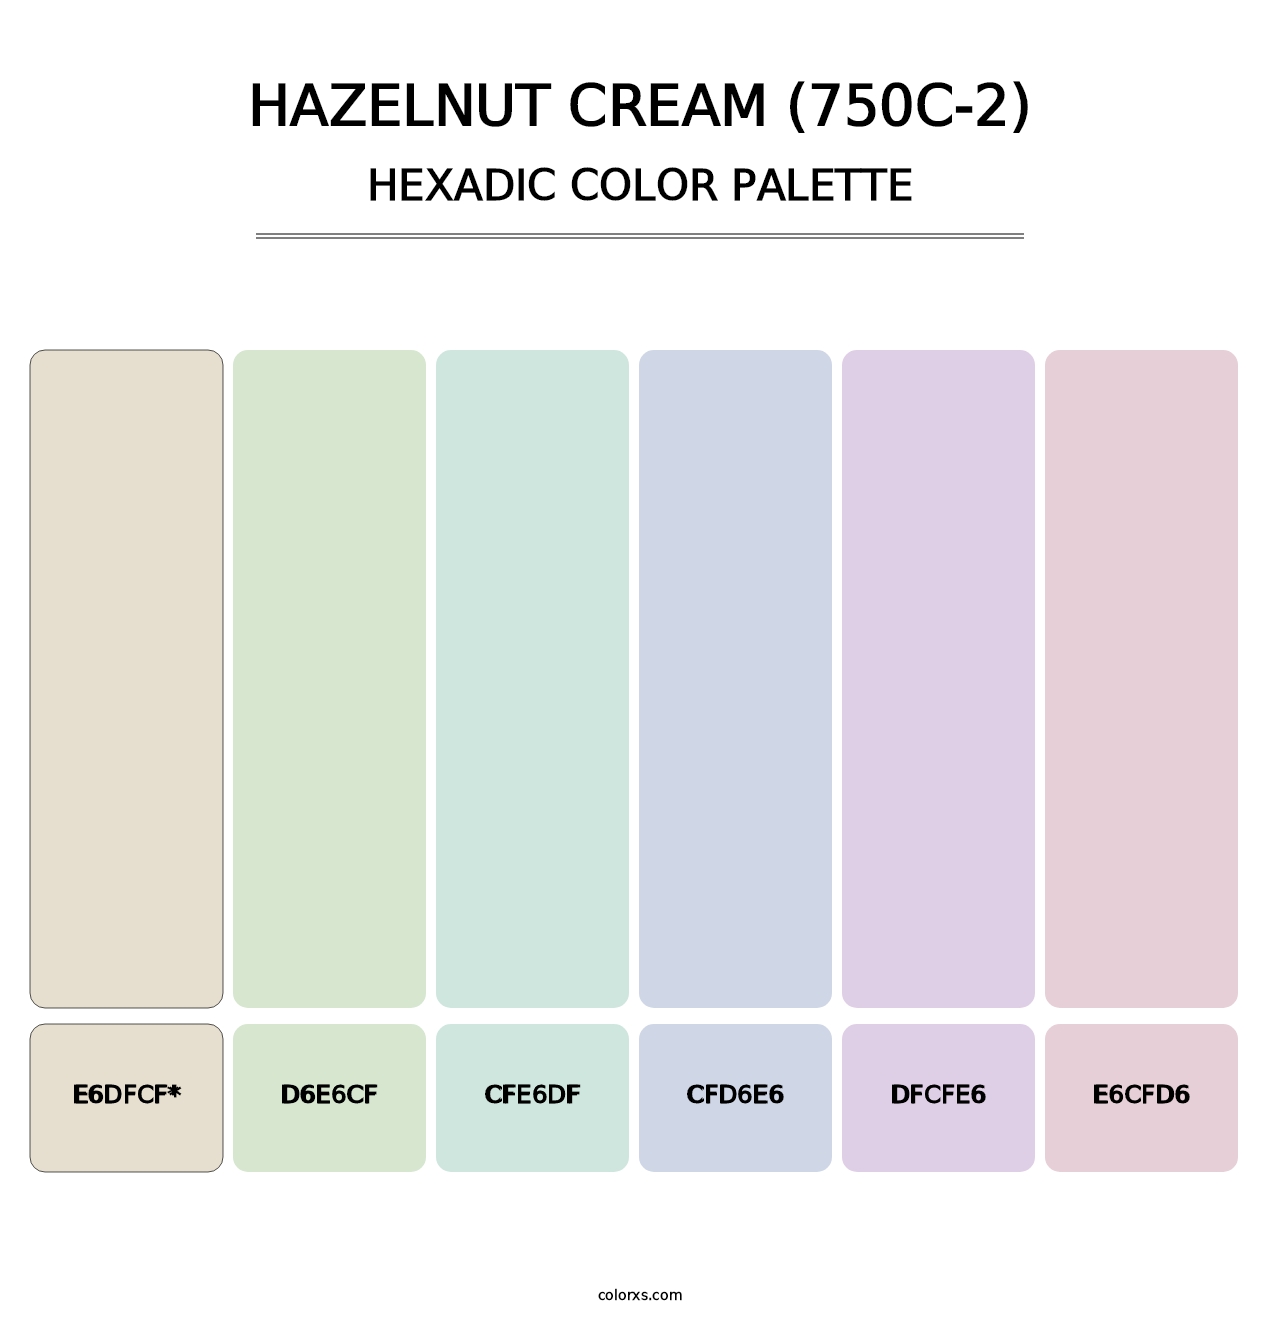 Hazelnut Cream (750C-2) - Hexadic Color Palette